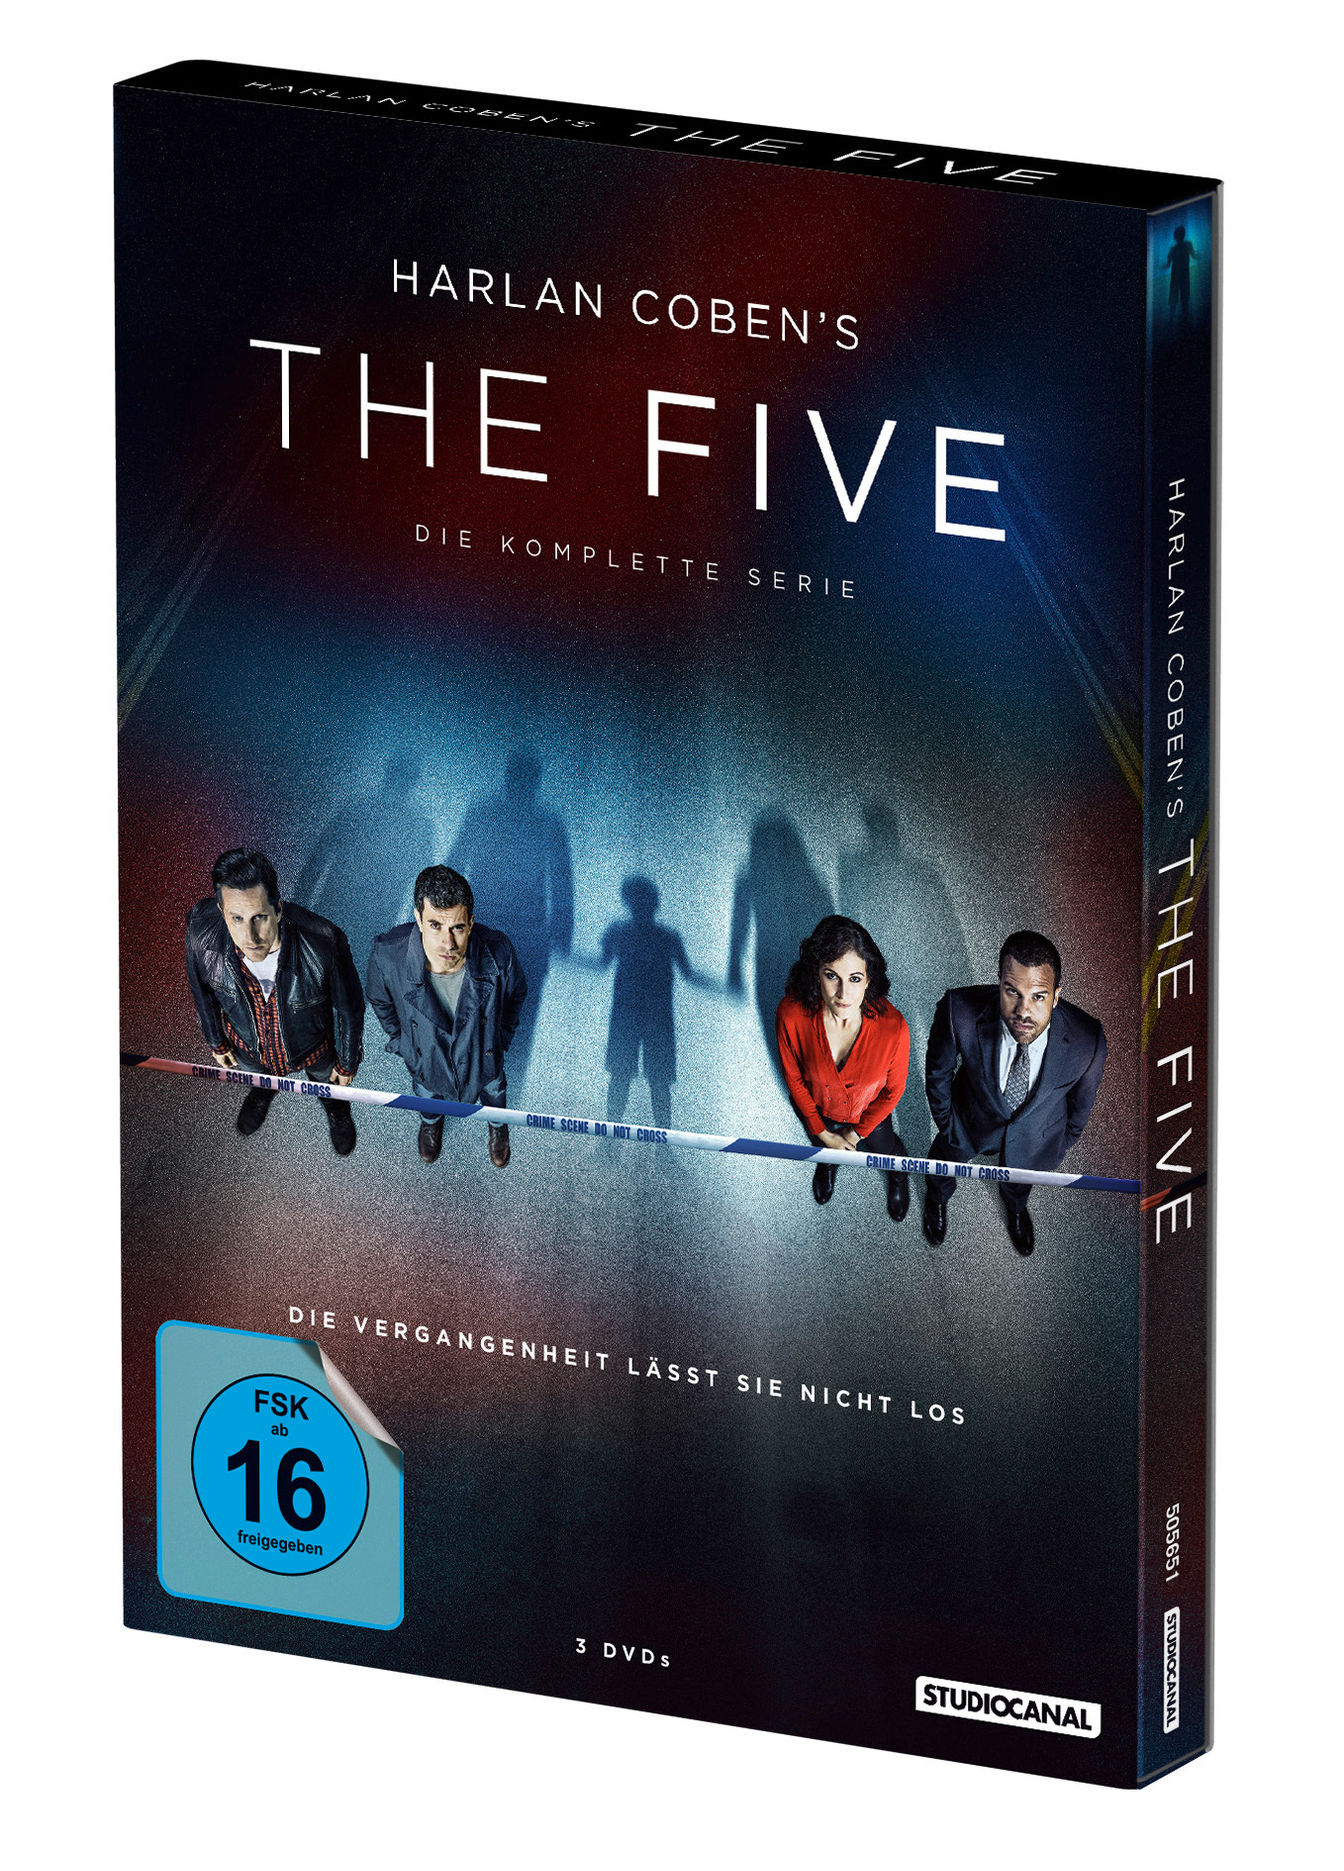 The Five - Die komplette Serie DVD bei Weltbild.de bestellen